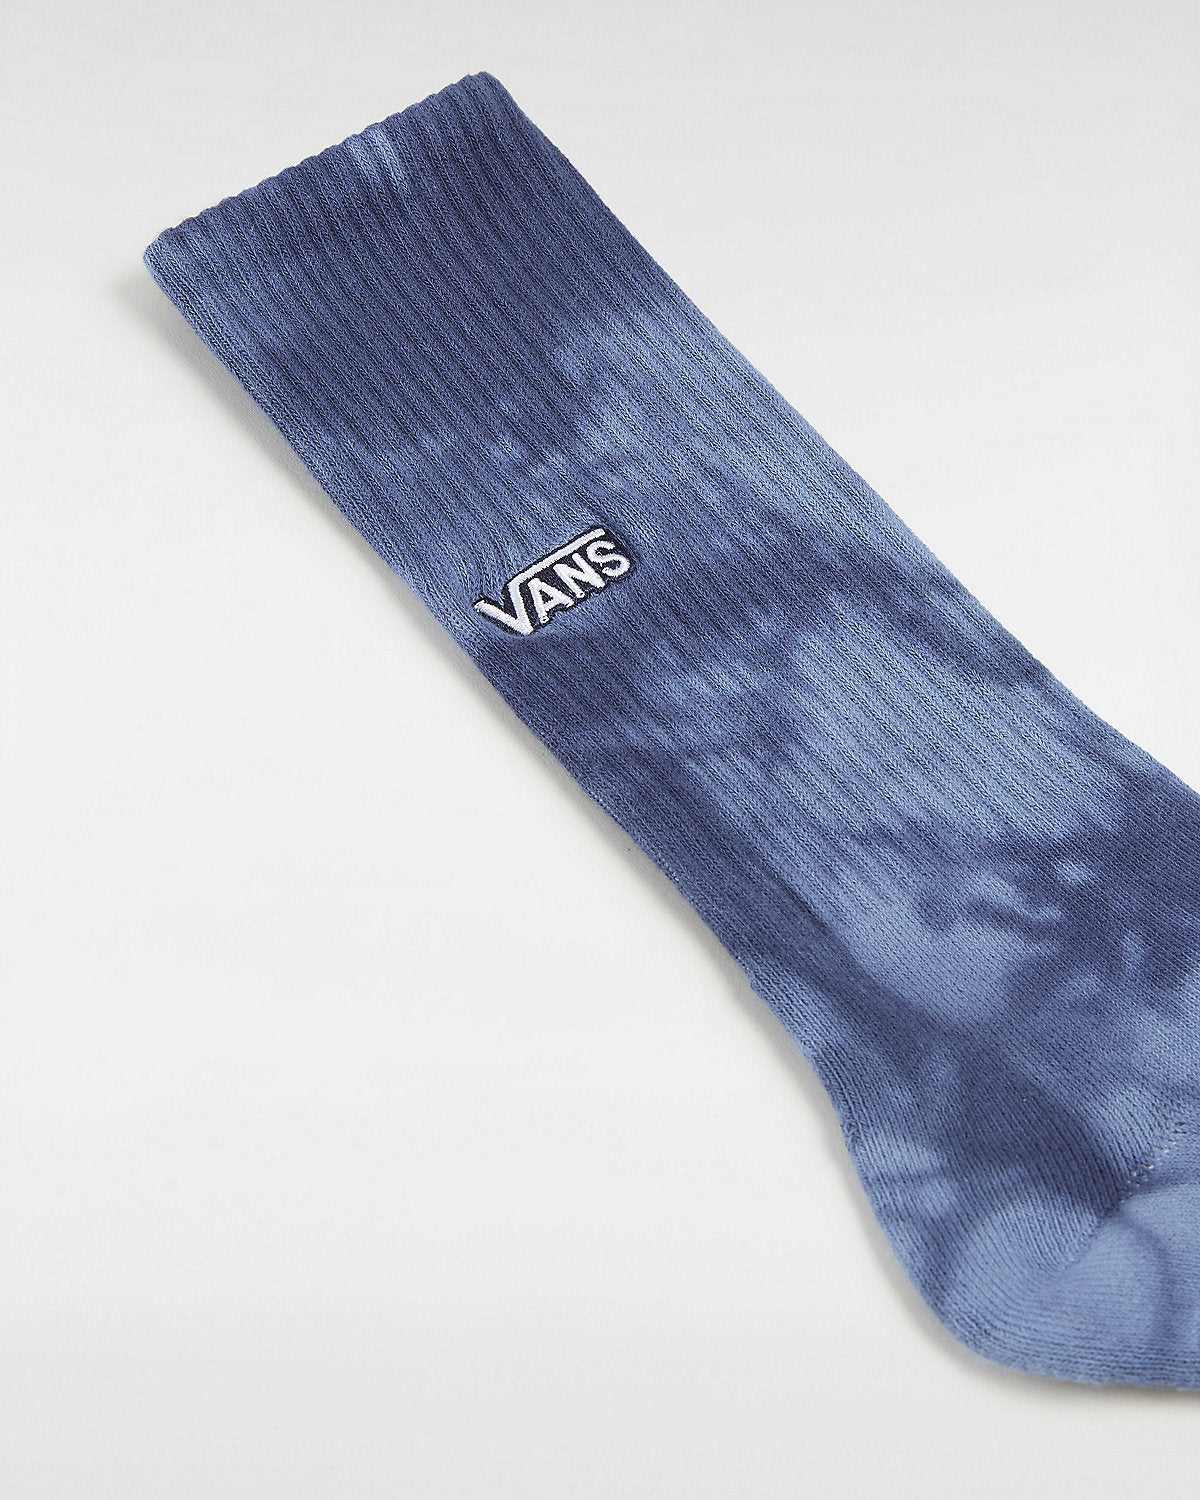 VANS Mens Tie Dye Crew Socks (1 Pair) - Copen Blue